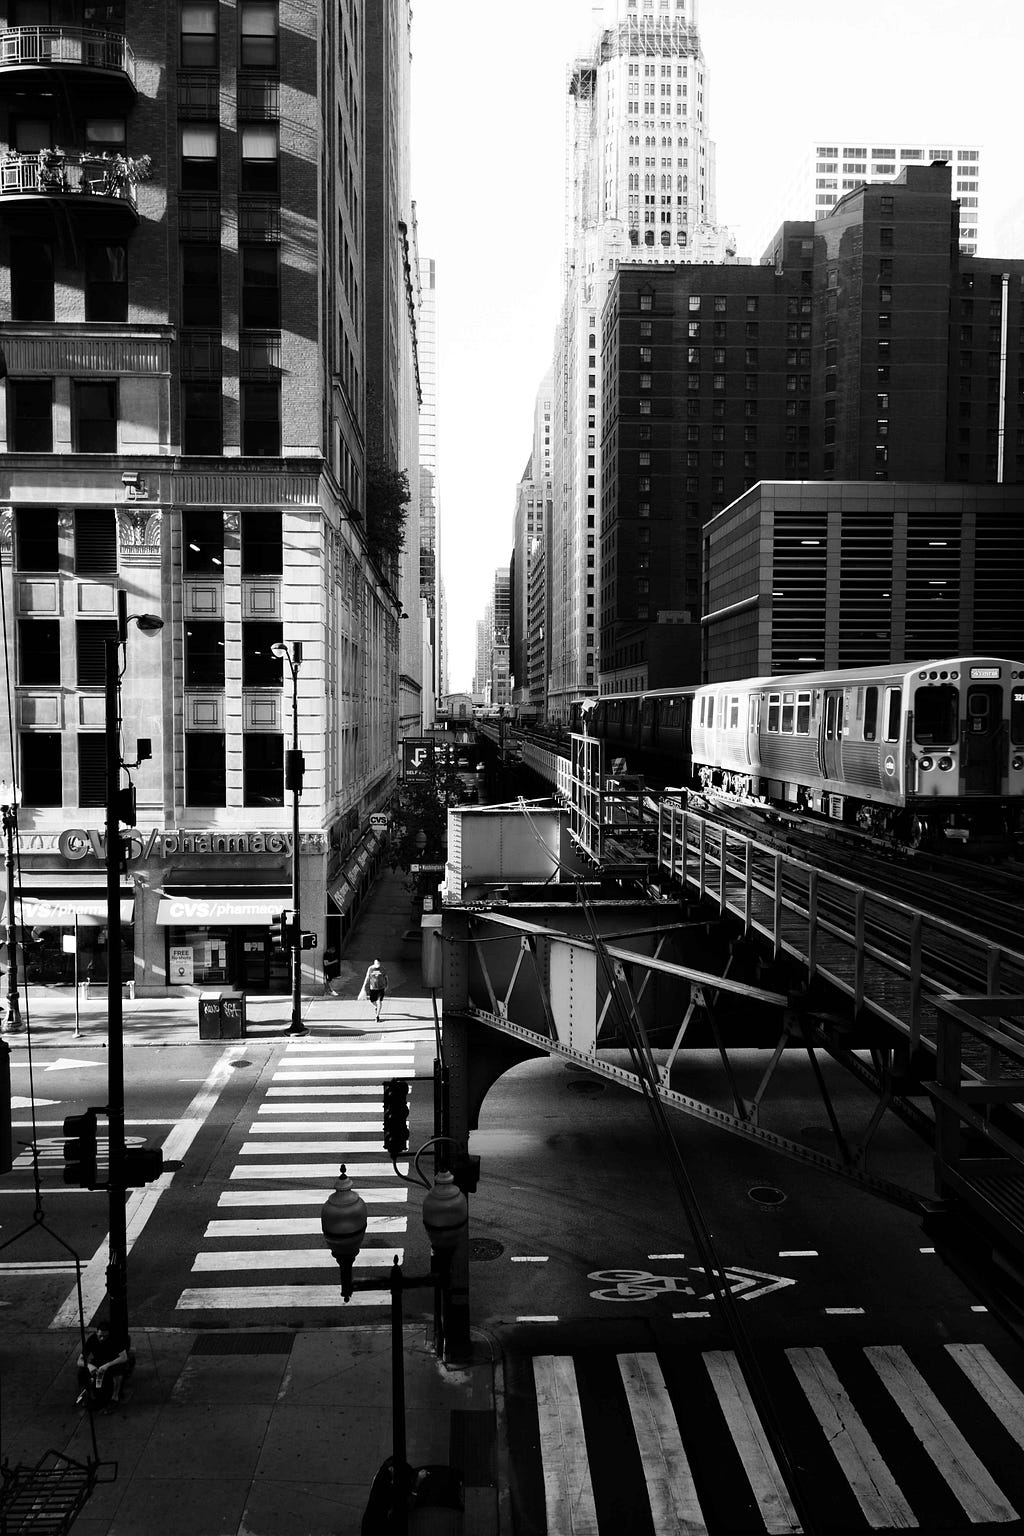 Chicago street photography by Kiki